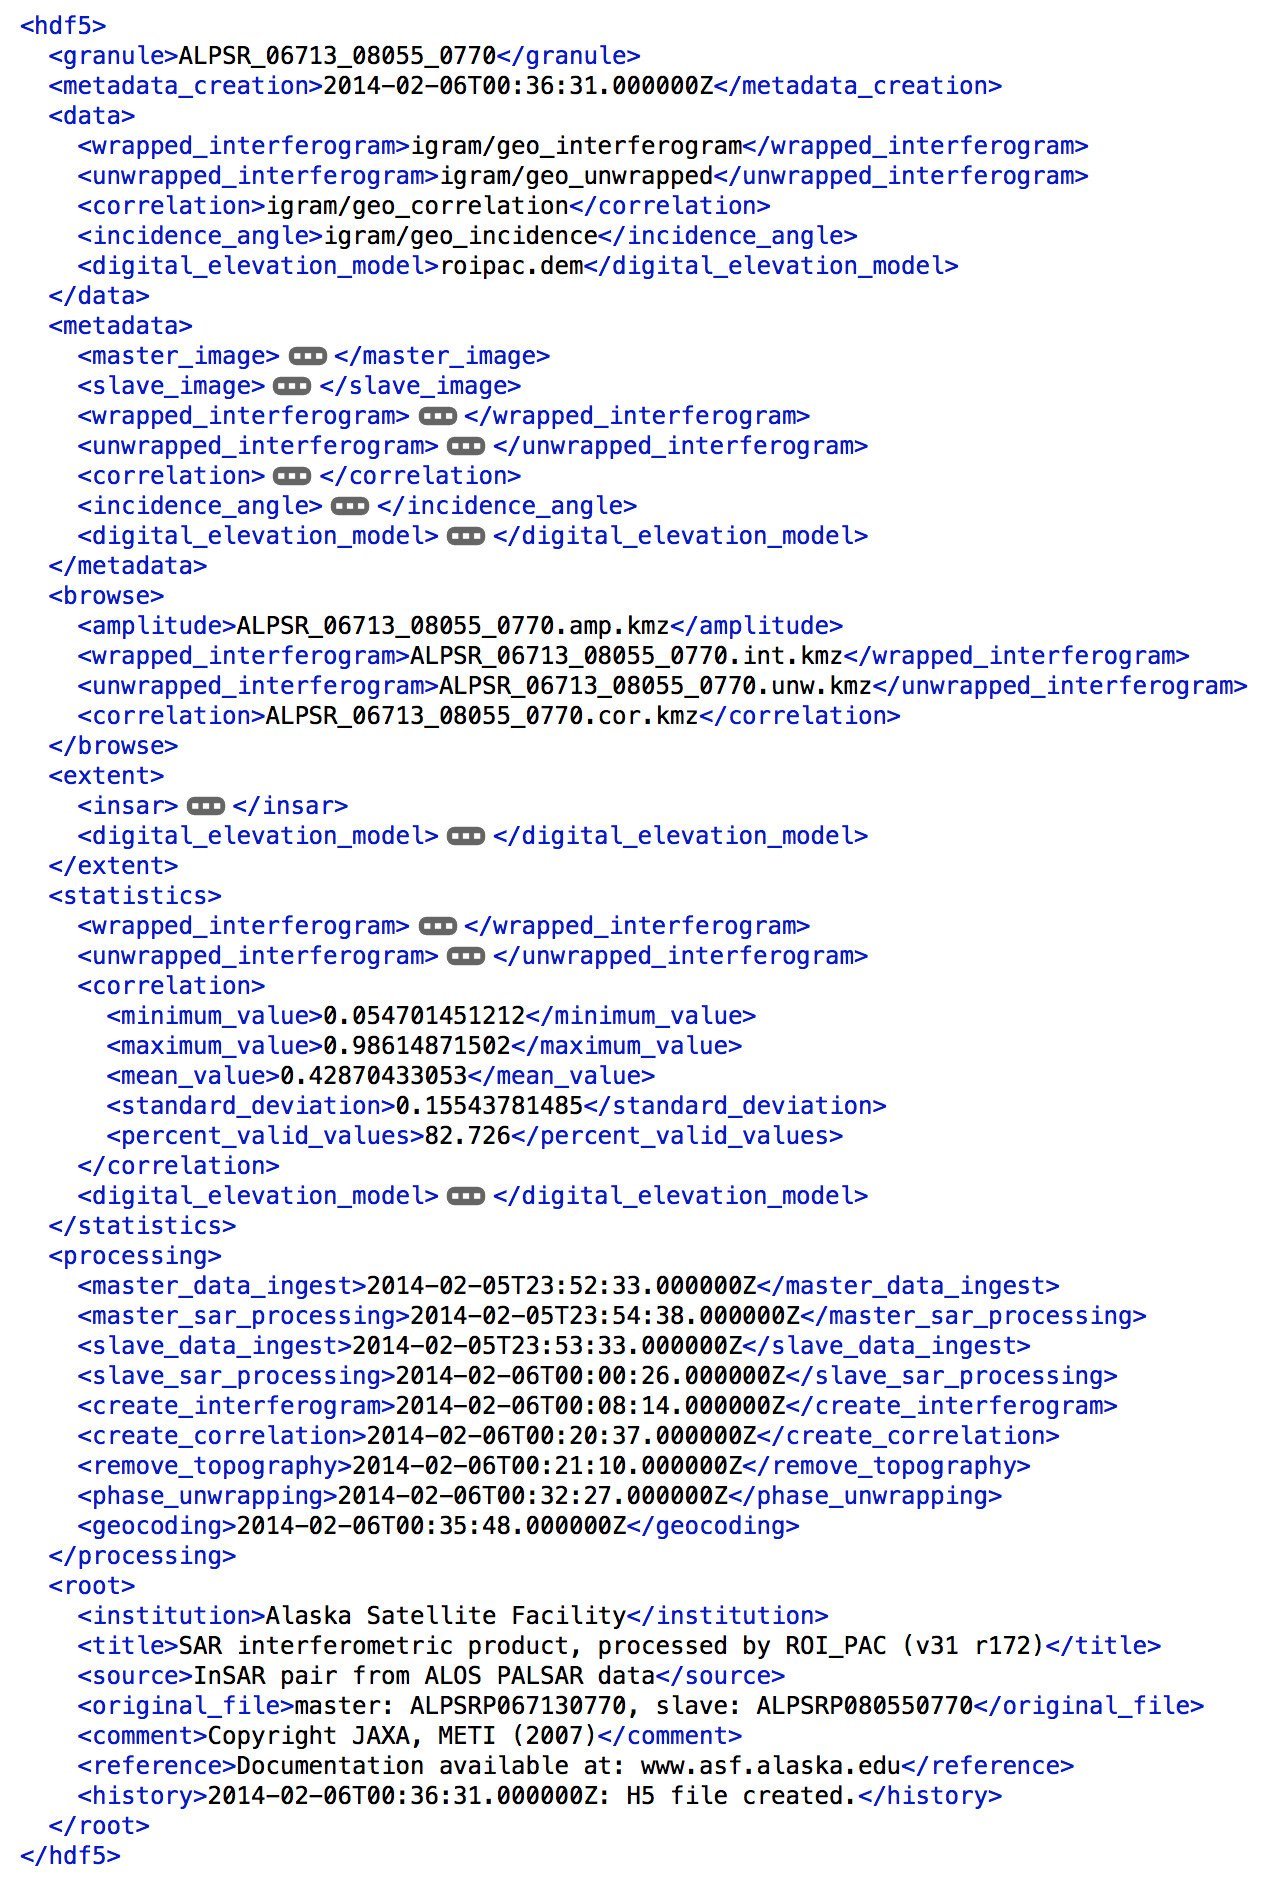 Example of XML metadata file used to generate ISO compliant metadata.